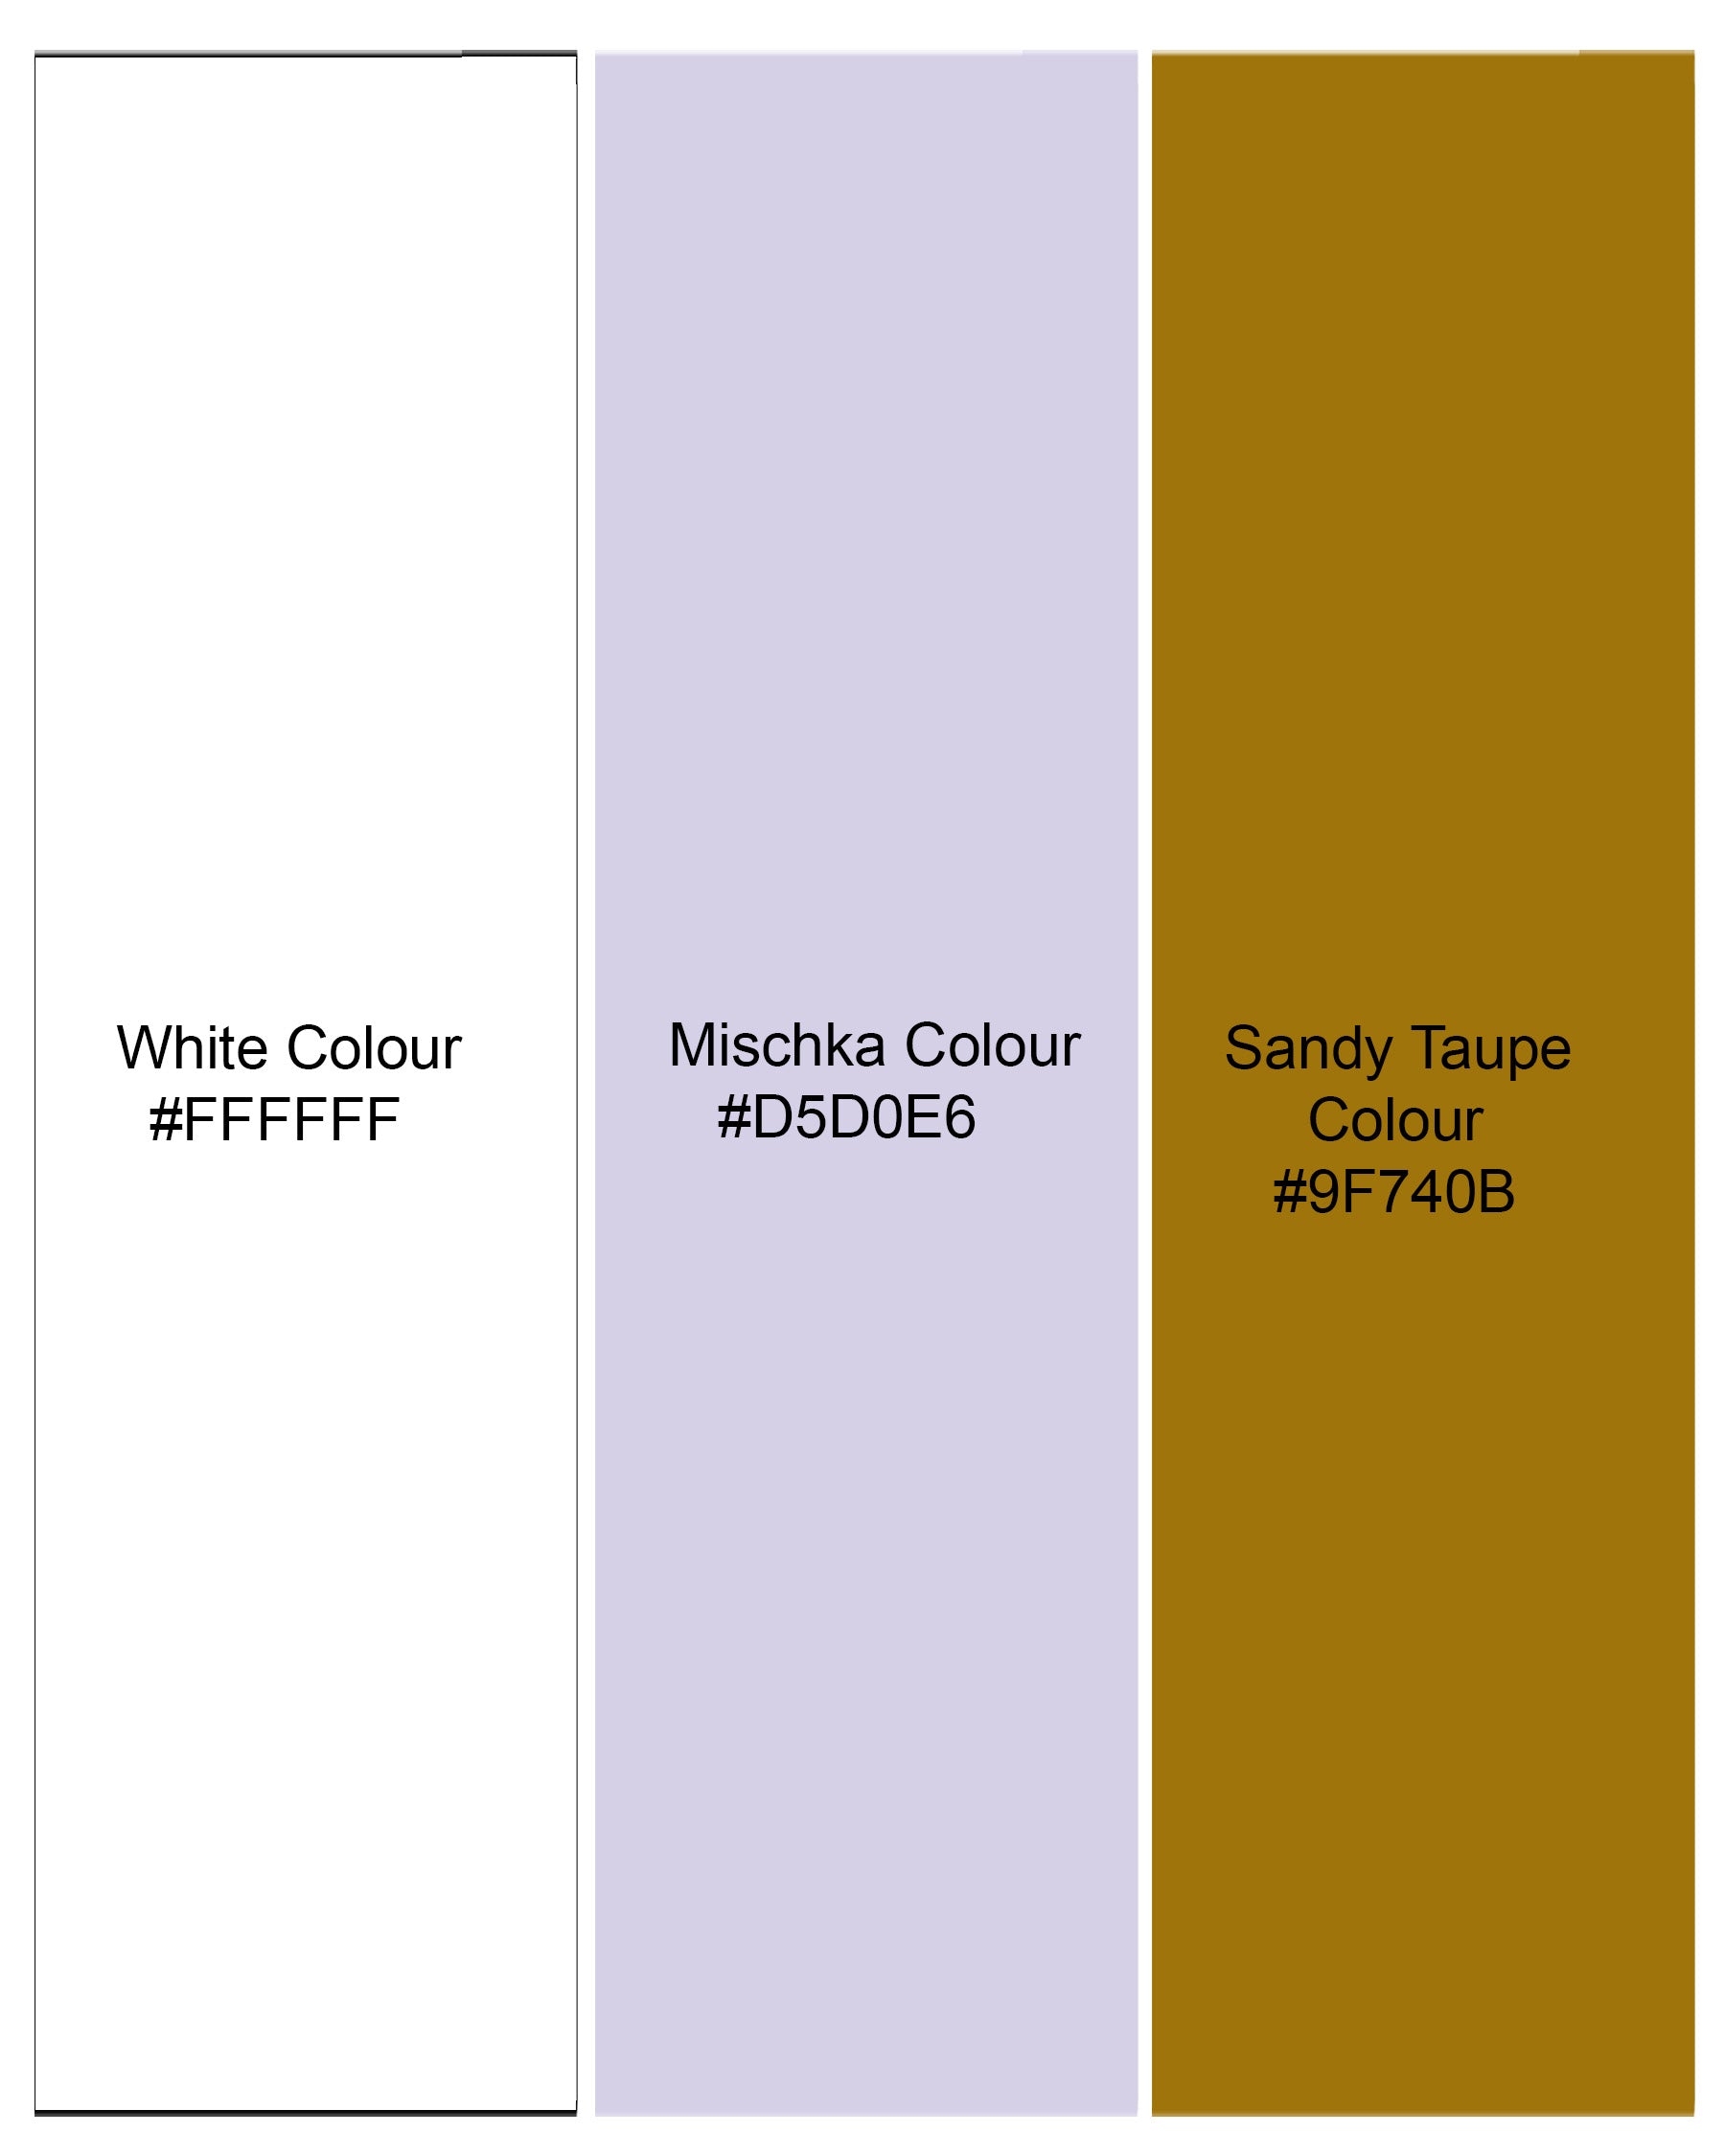 Mischka Light Violet and White Plaid Premium Cotton Shirt 7755-38, 7755-H-38, 7755-39,7755-H-39, 7755-40, 7755-H-40, 7755-42, 7755-H-42, 7755-44, 7755-H-44, 7755-46, 7755-H-46, 7755-48, 7755-H-48, 7755-50, 7755-H-50, 7755-52, 7755-H-52